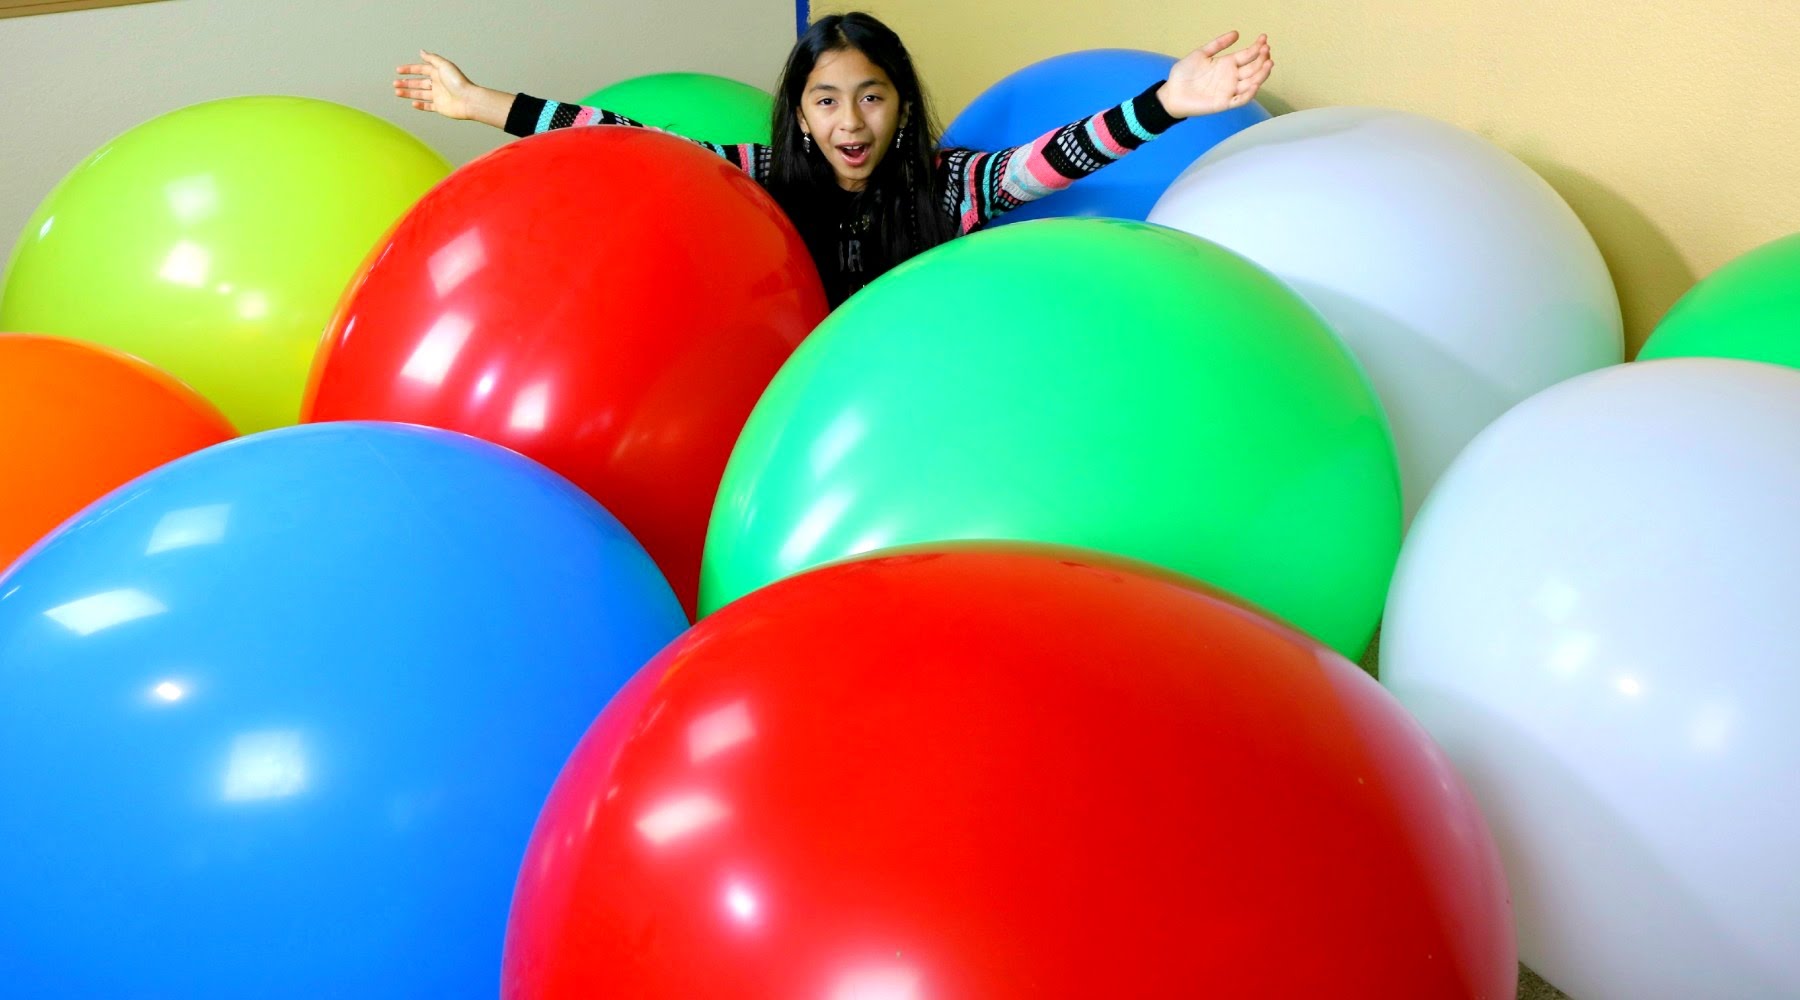 4 в огромном шаре. Giant Balloon. Pop giant Balloon. Интерактив со зрителями c большими шарами. Balloon Pop Challenge.